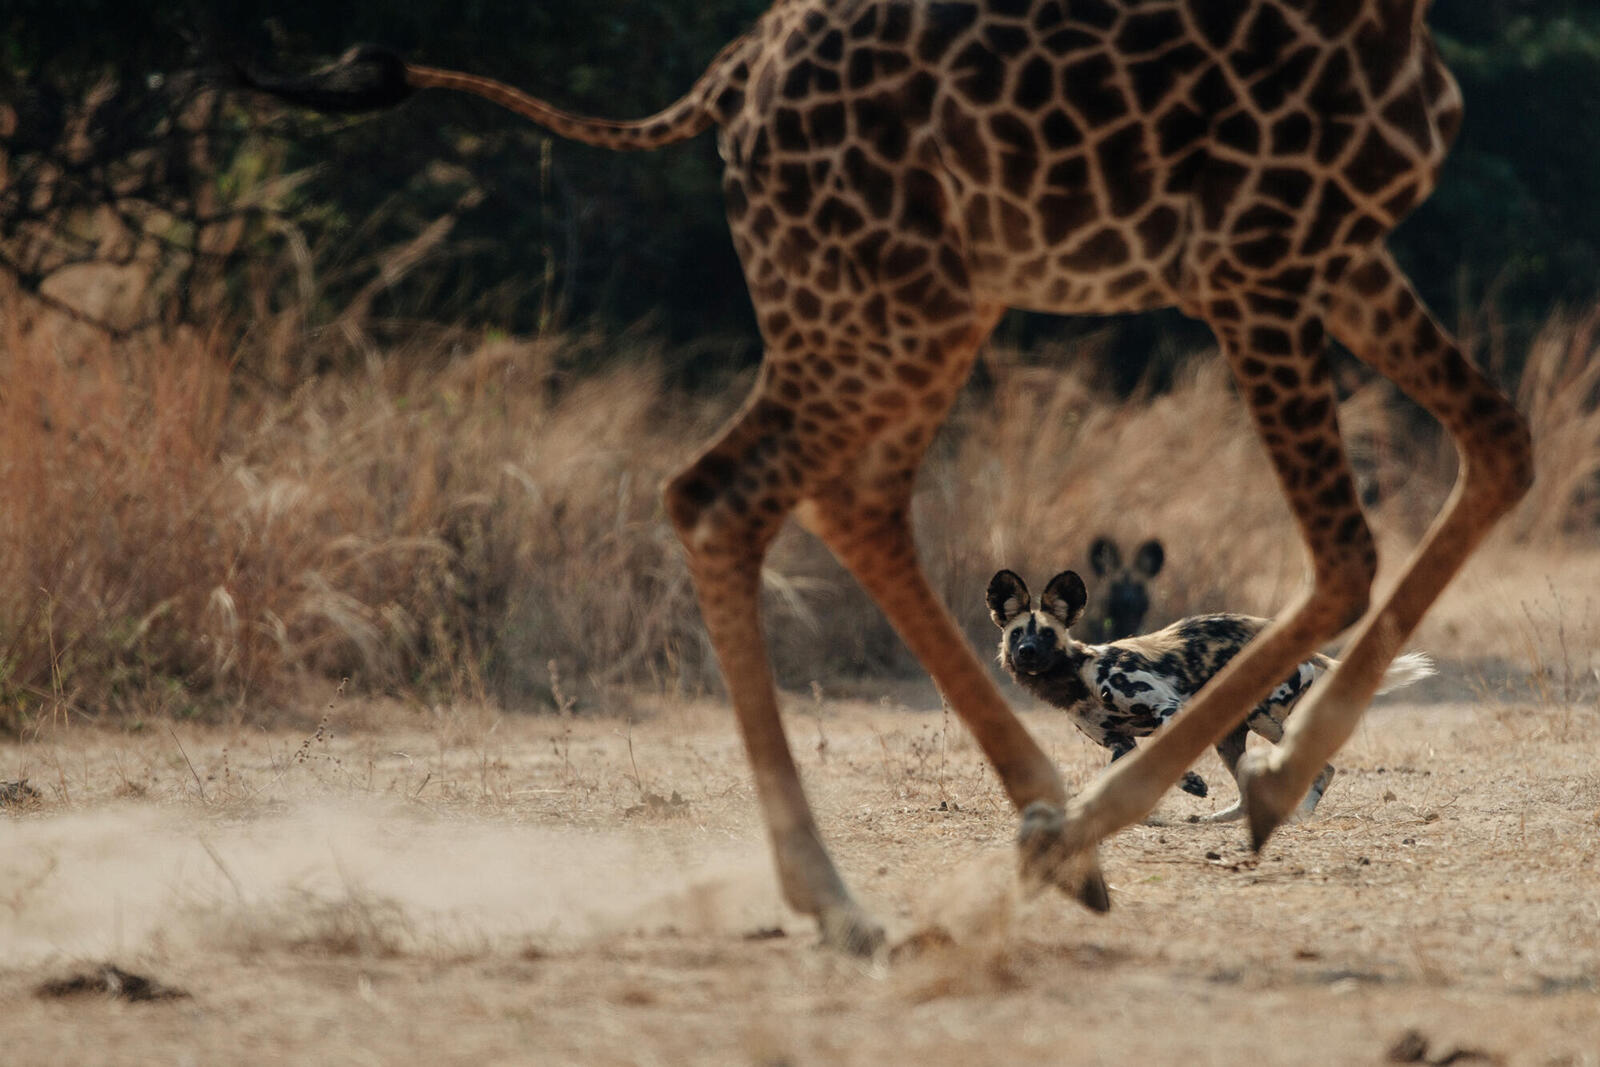 African Wild dog chases giraffe